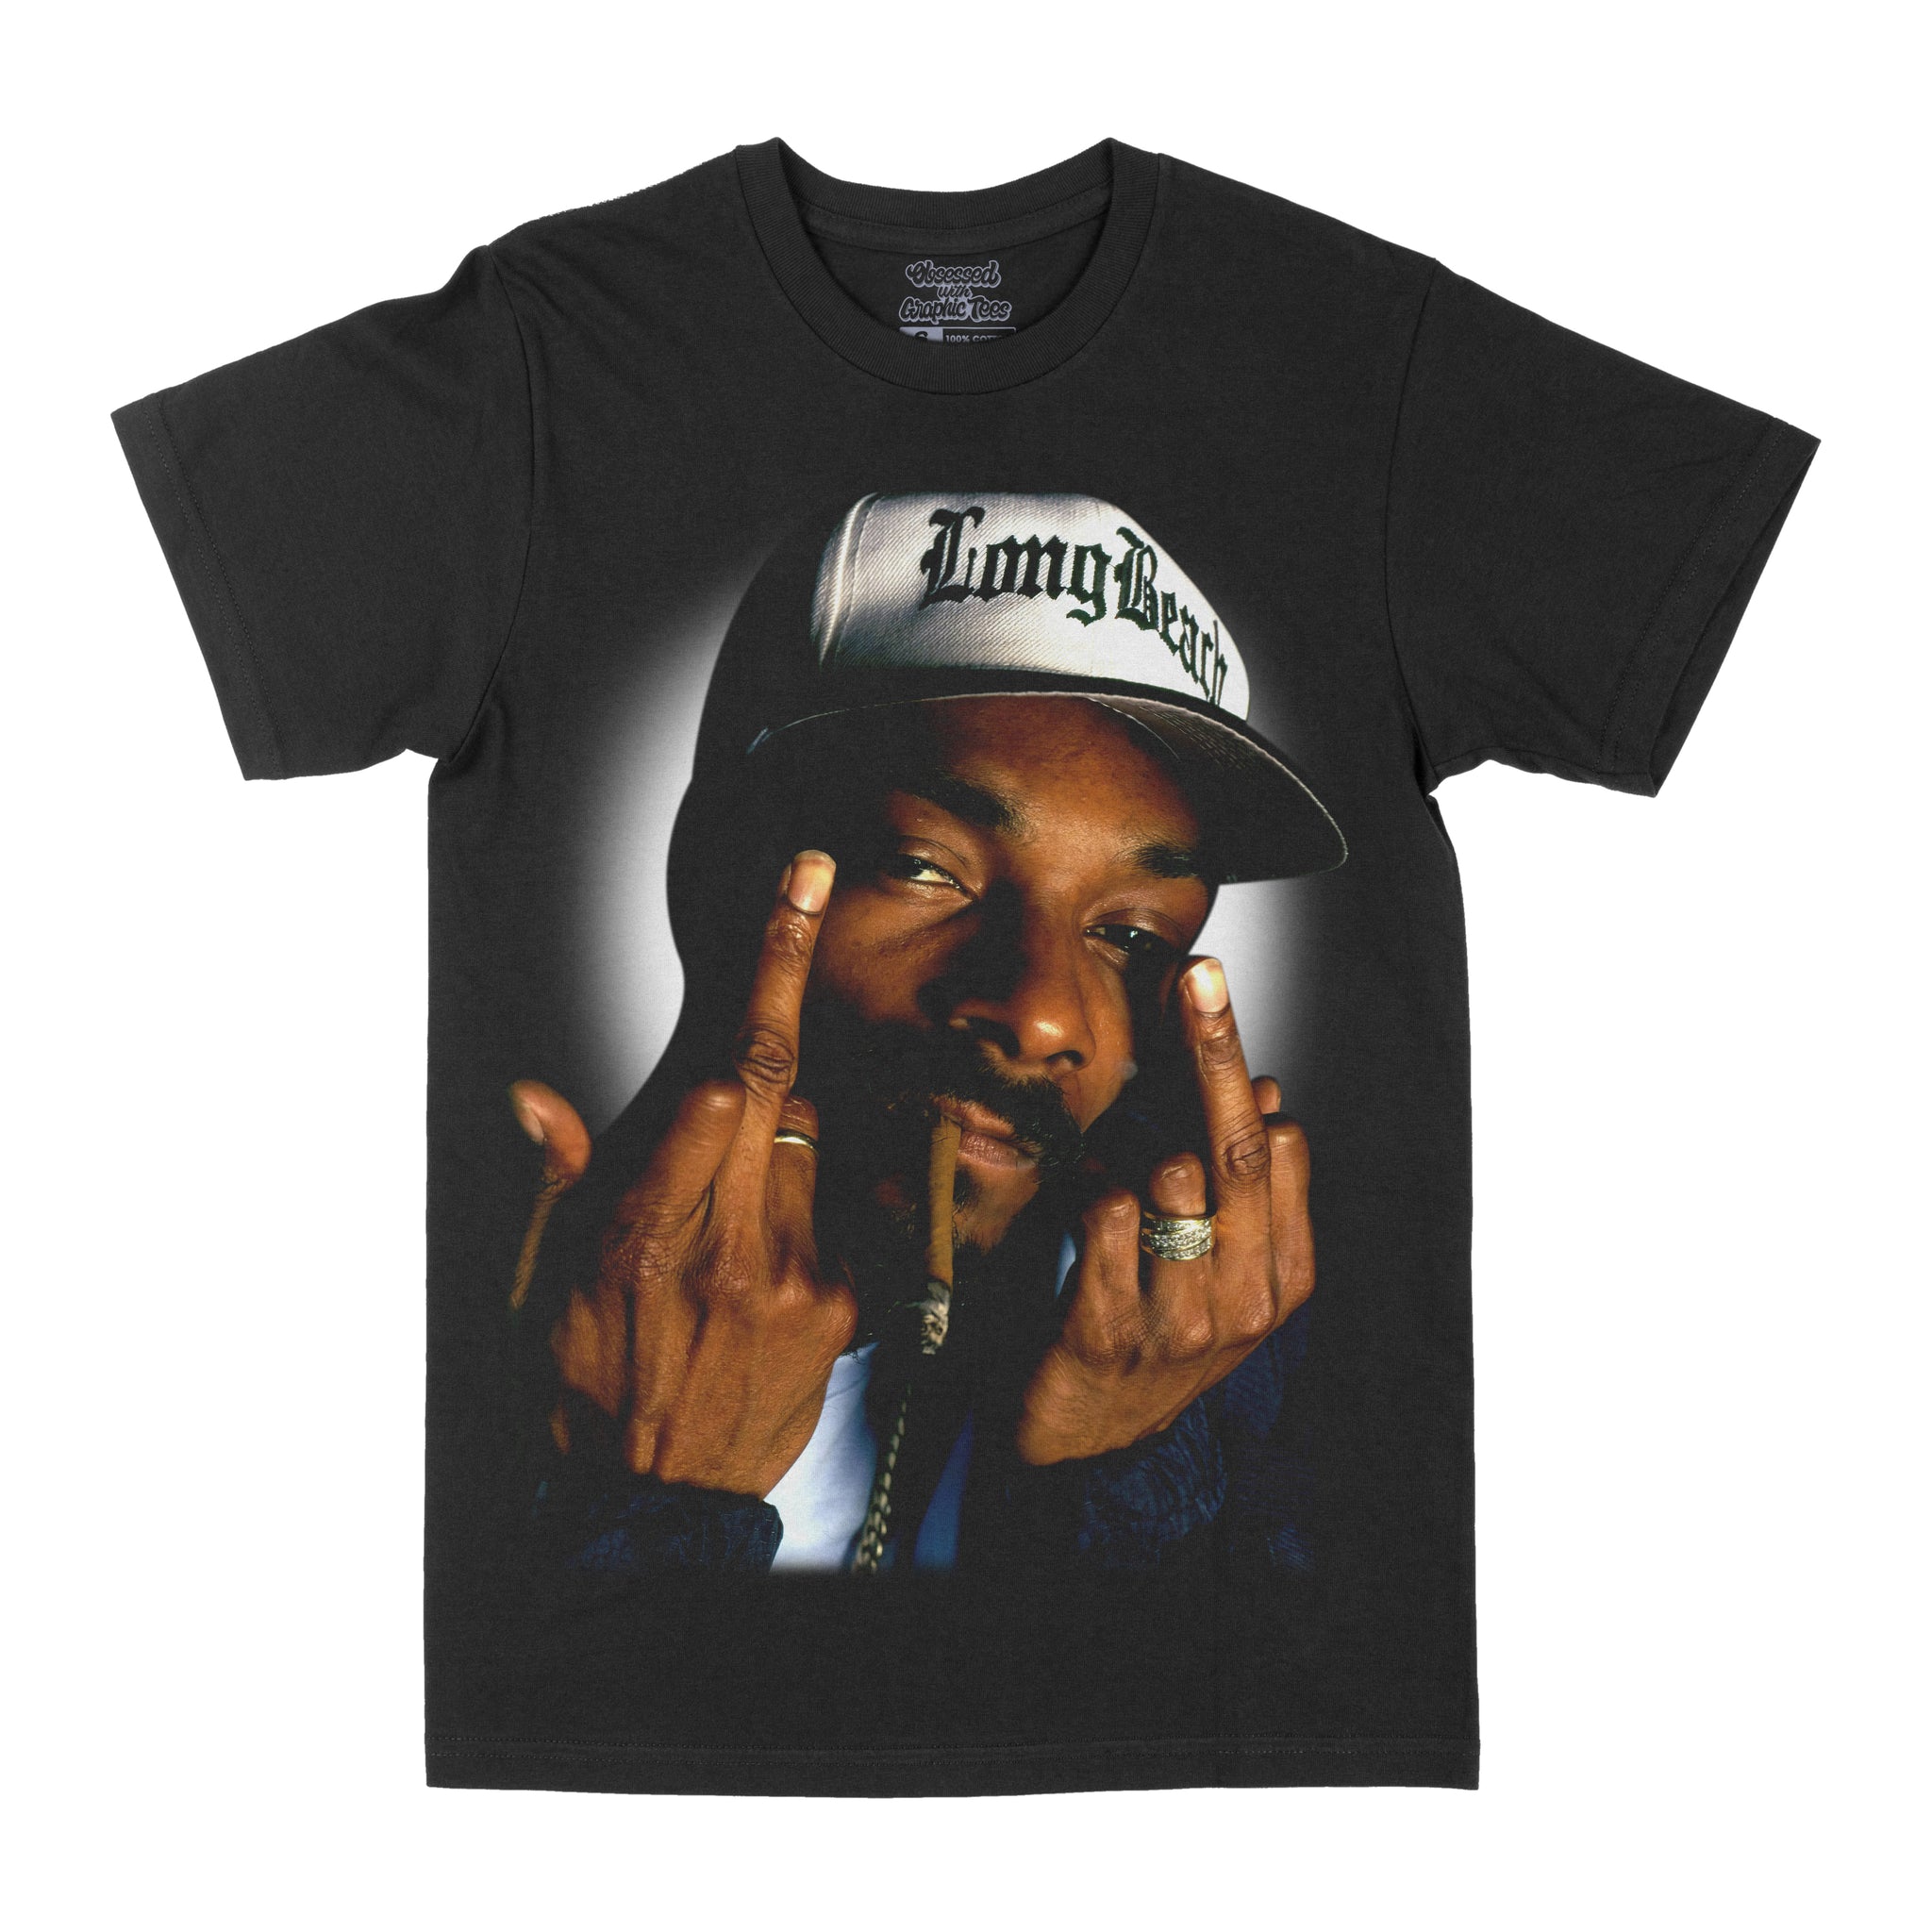 Snoop Dogg "Long Beach" Graphic Tee